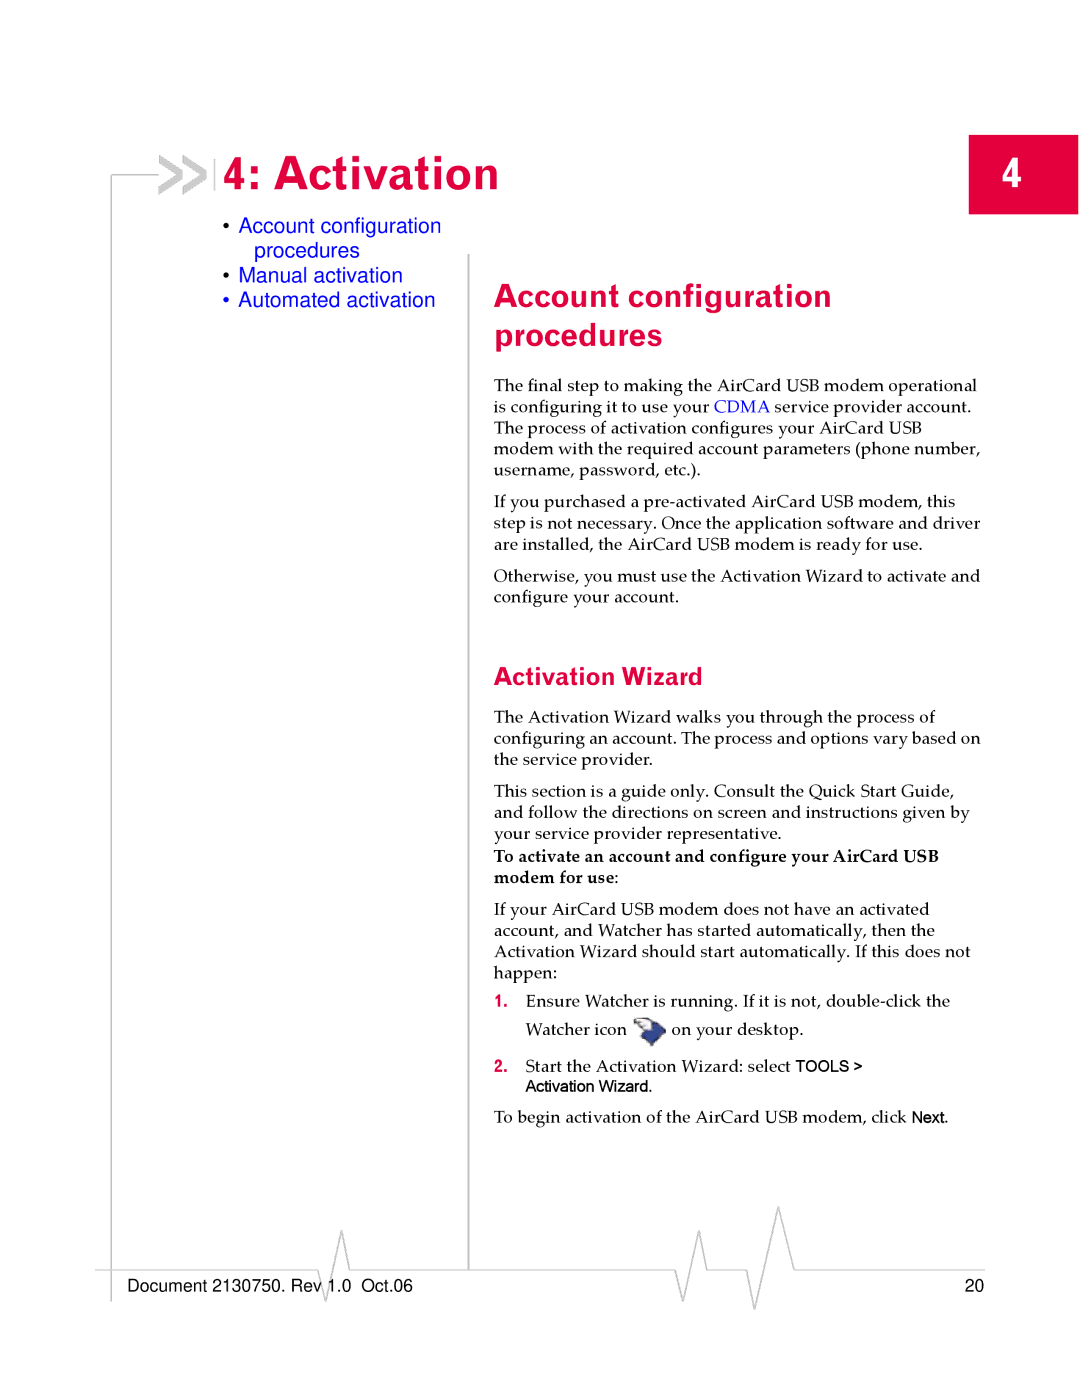 Sierra Wireless 595U manual Account configuration procedures, Activation Wizard 